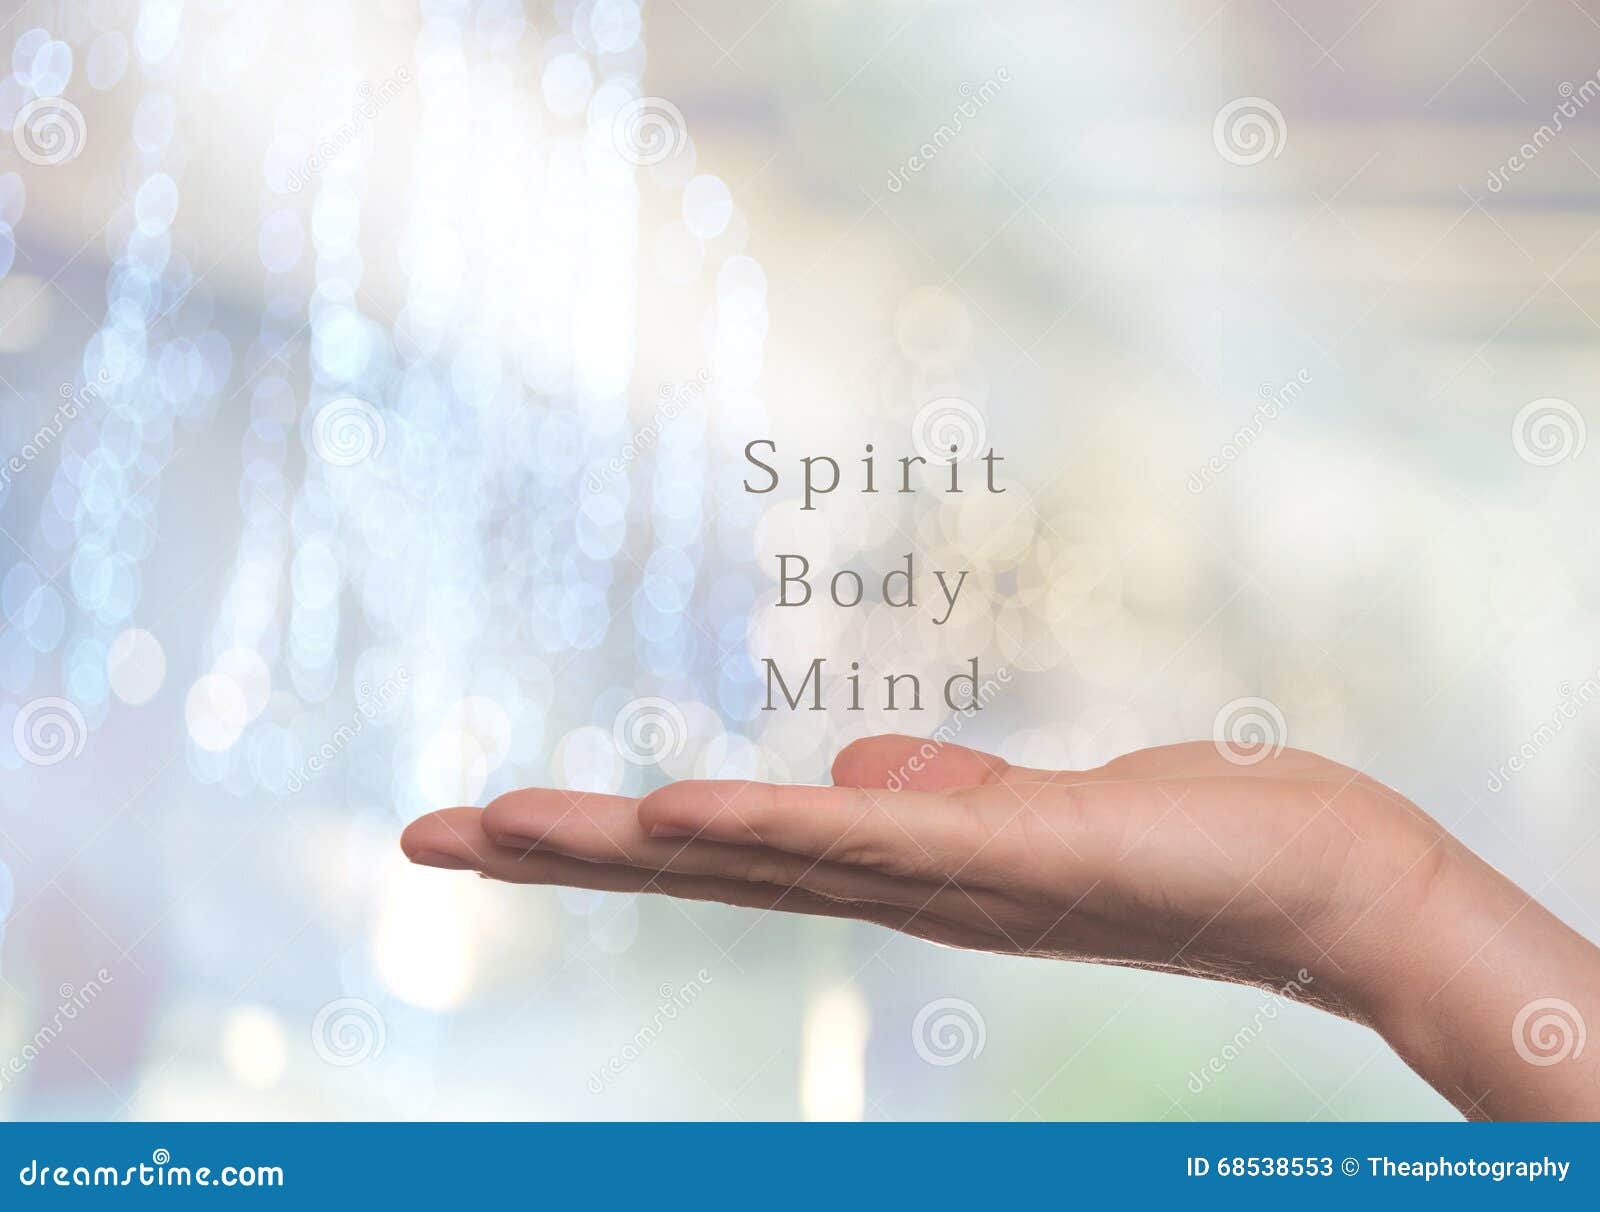 spirit, body and mind,